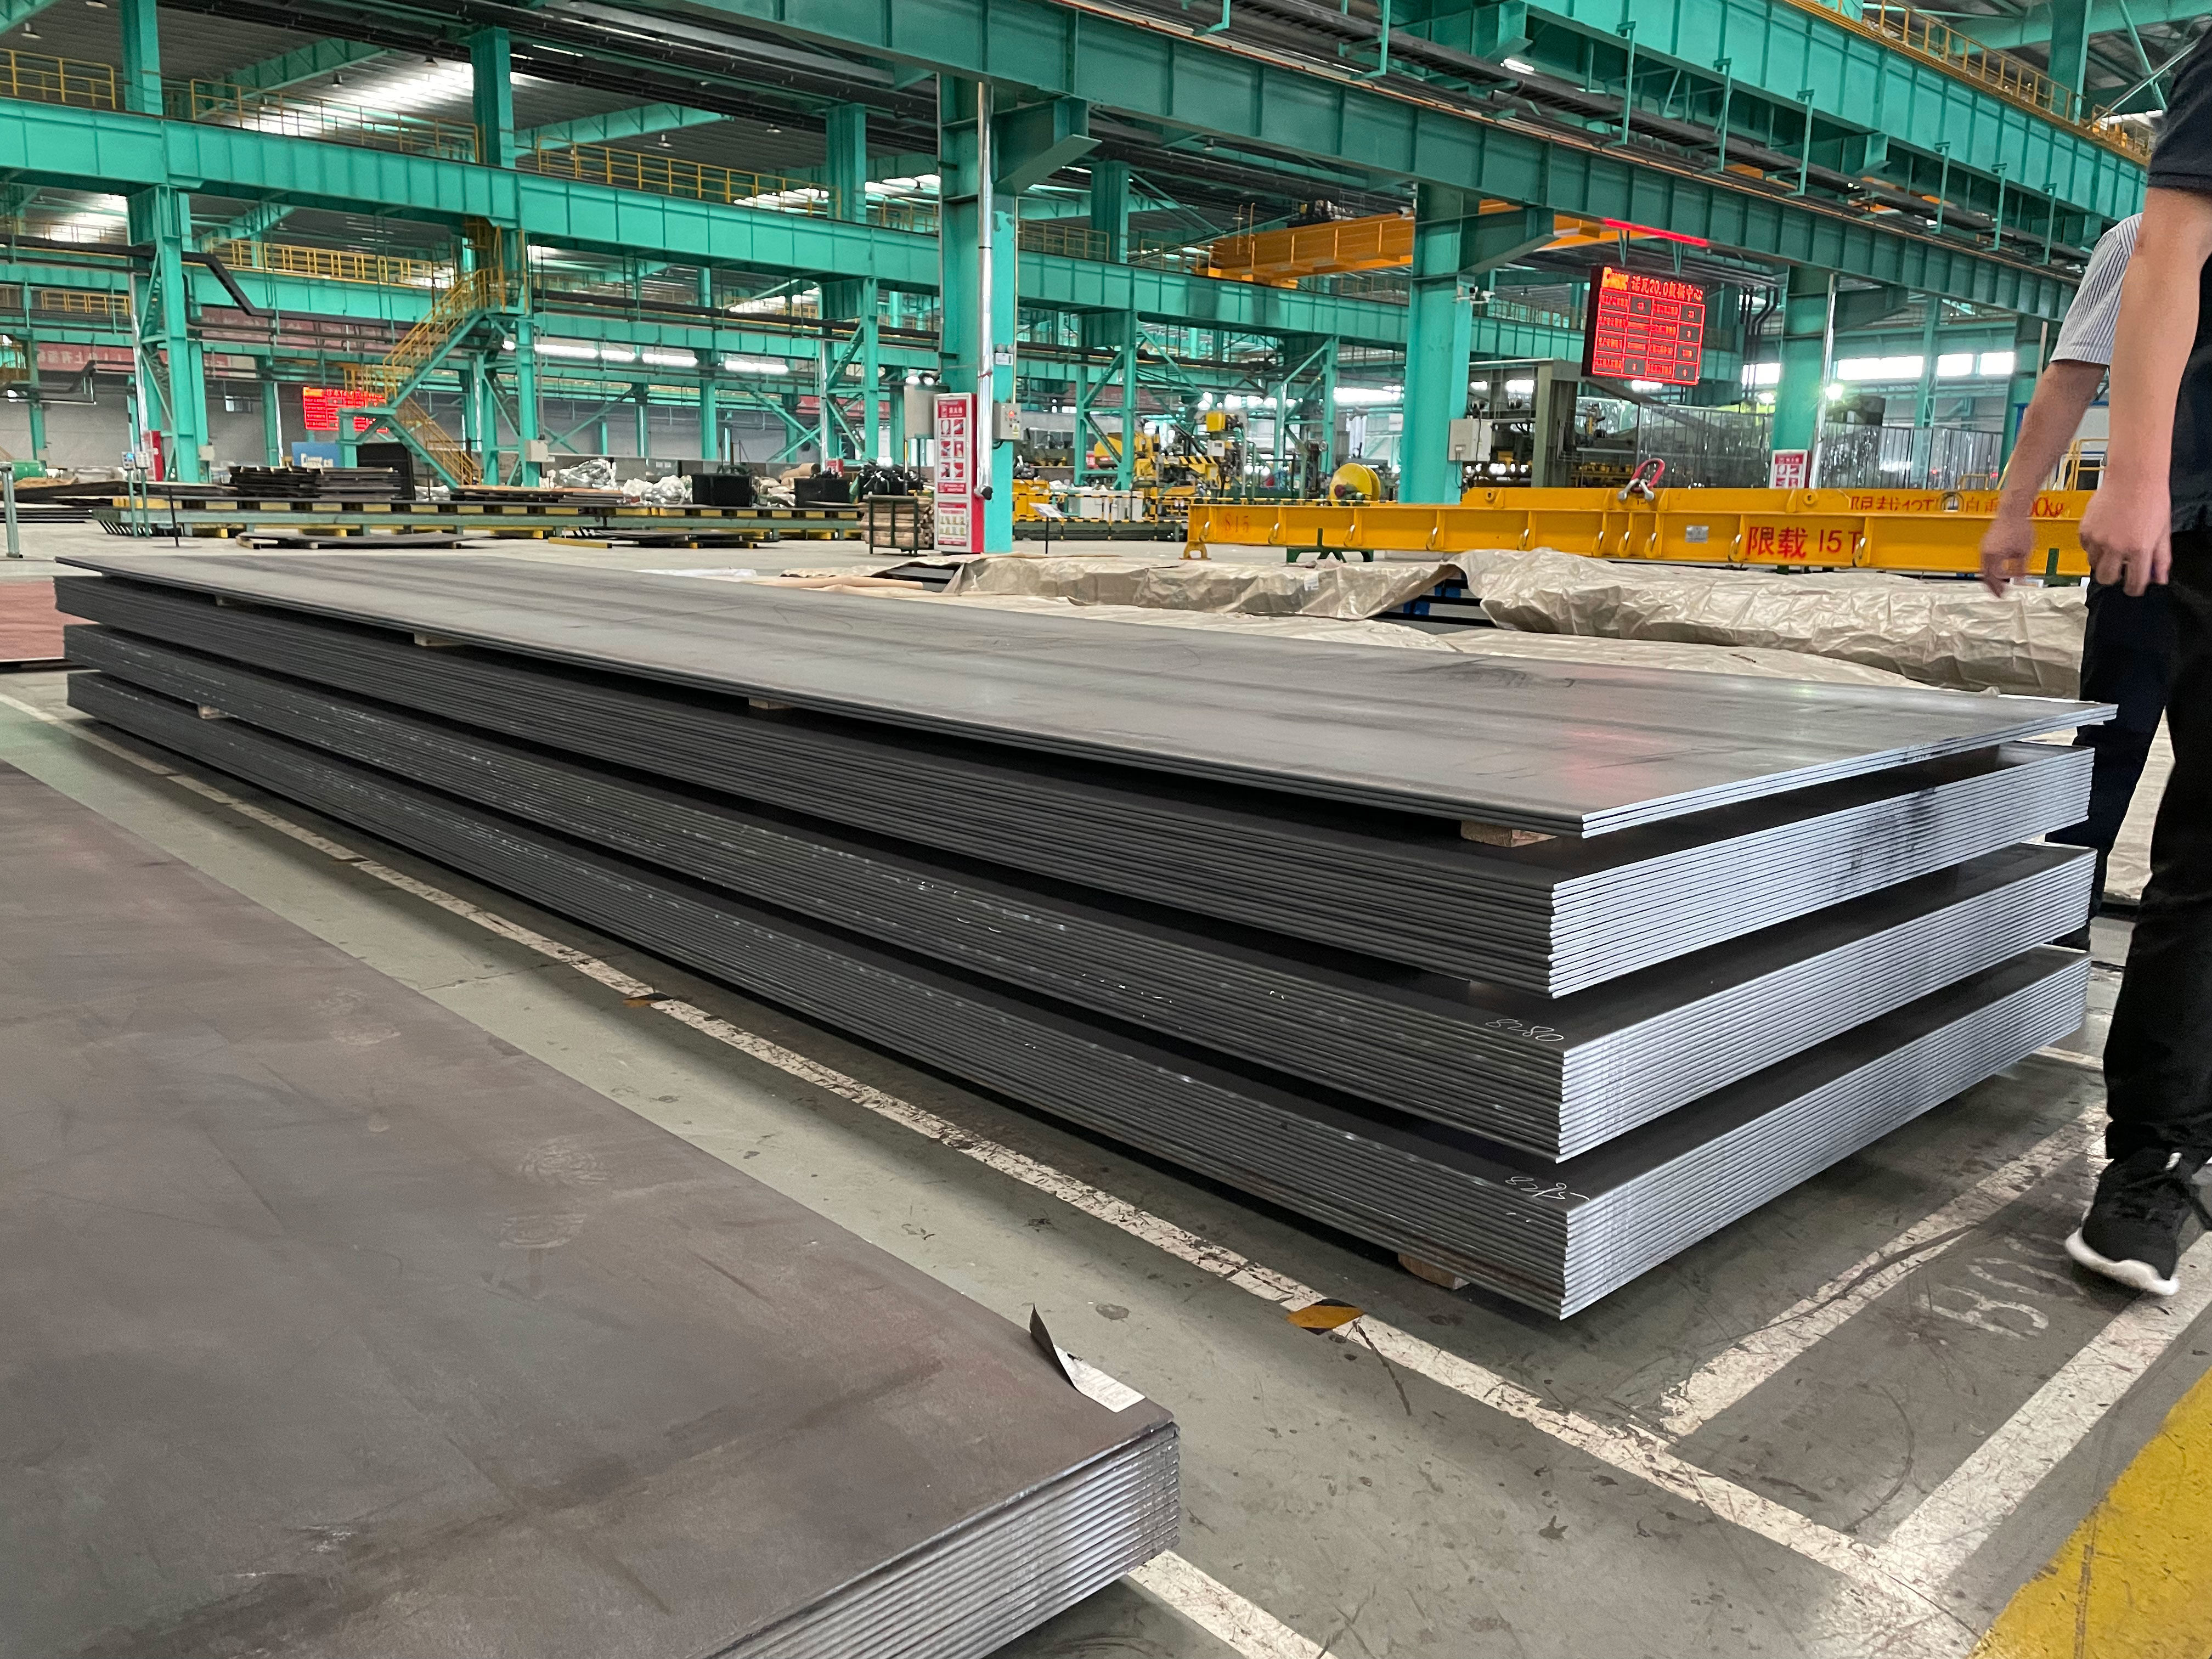 Shanghai Zhongze Yi Metal Disassembly Co., Ltd. bangga dengan produknya – pelat baja karbon